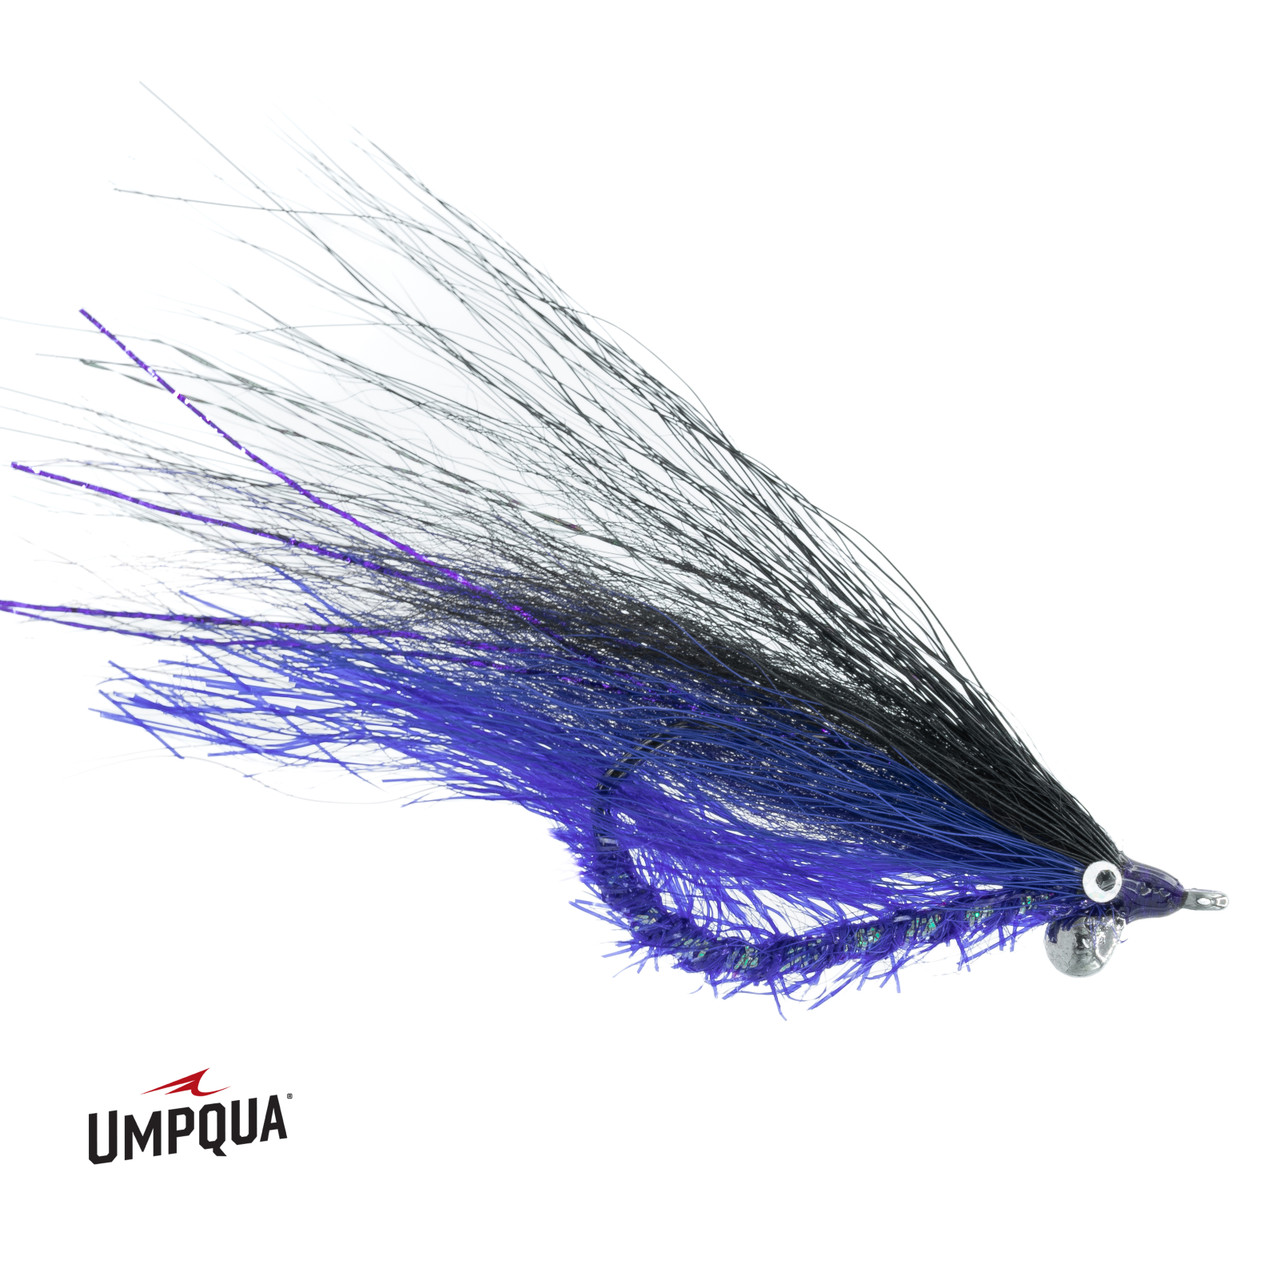 CHEWEY'S BENDER - Umpqua Feather Merchants